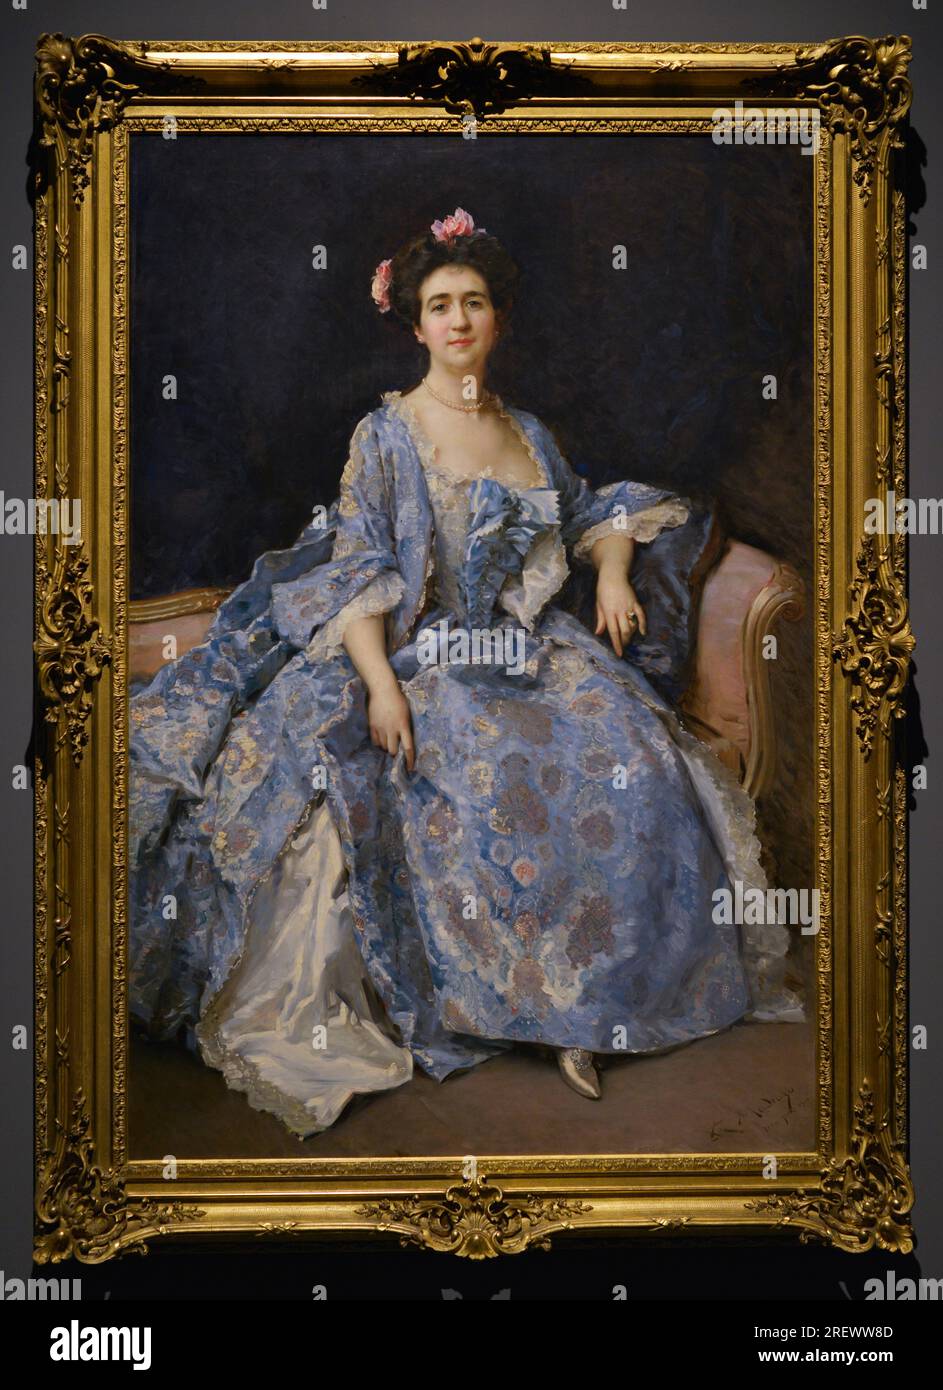 Raimundo de Madrazo y Garreta (1841-1920). Spanish painter. Portrait of Maria Hahn, the Painter's Wife, 1901. Oil on canvas, 192 x 128 cm. Prado Museum. Madrid. Spain. Stock Photo